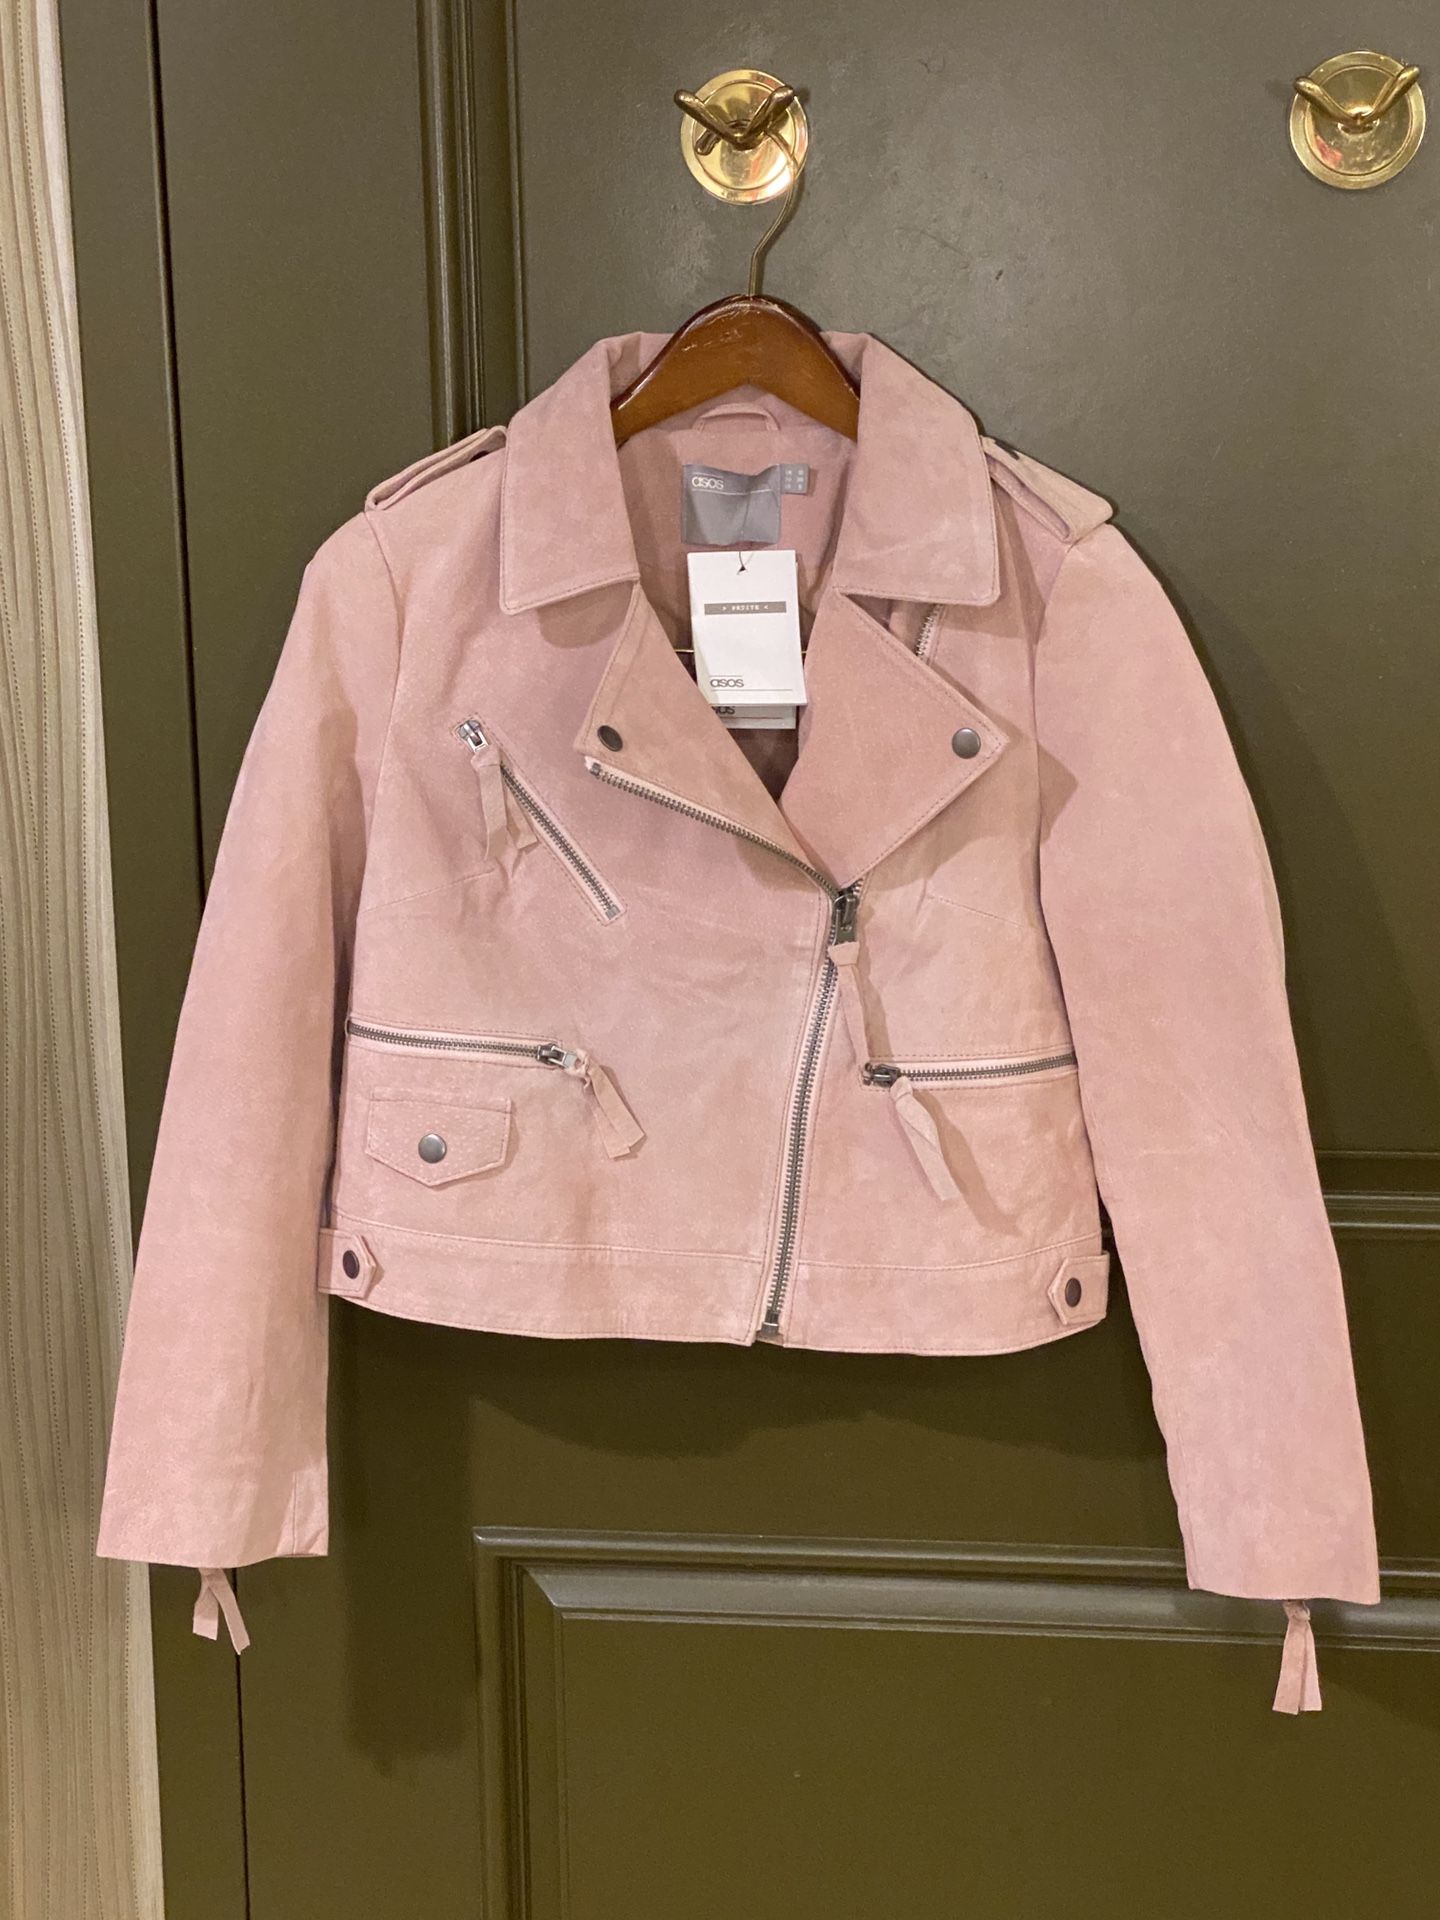 Pink Leather Jacket Petite Sized! New!